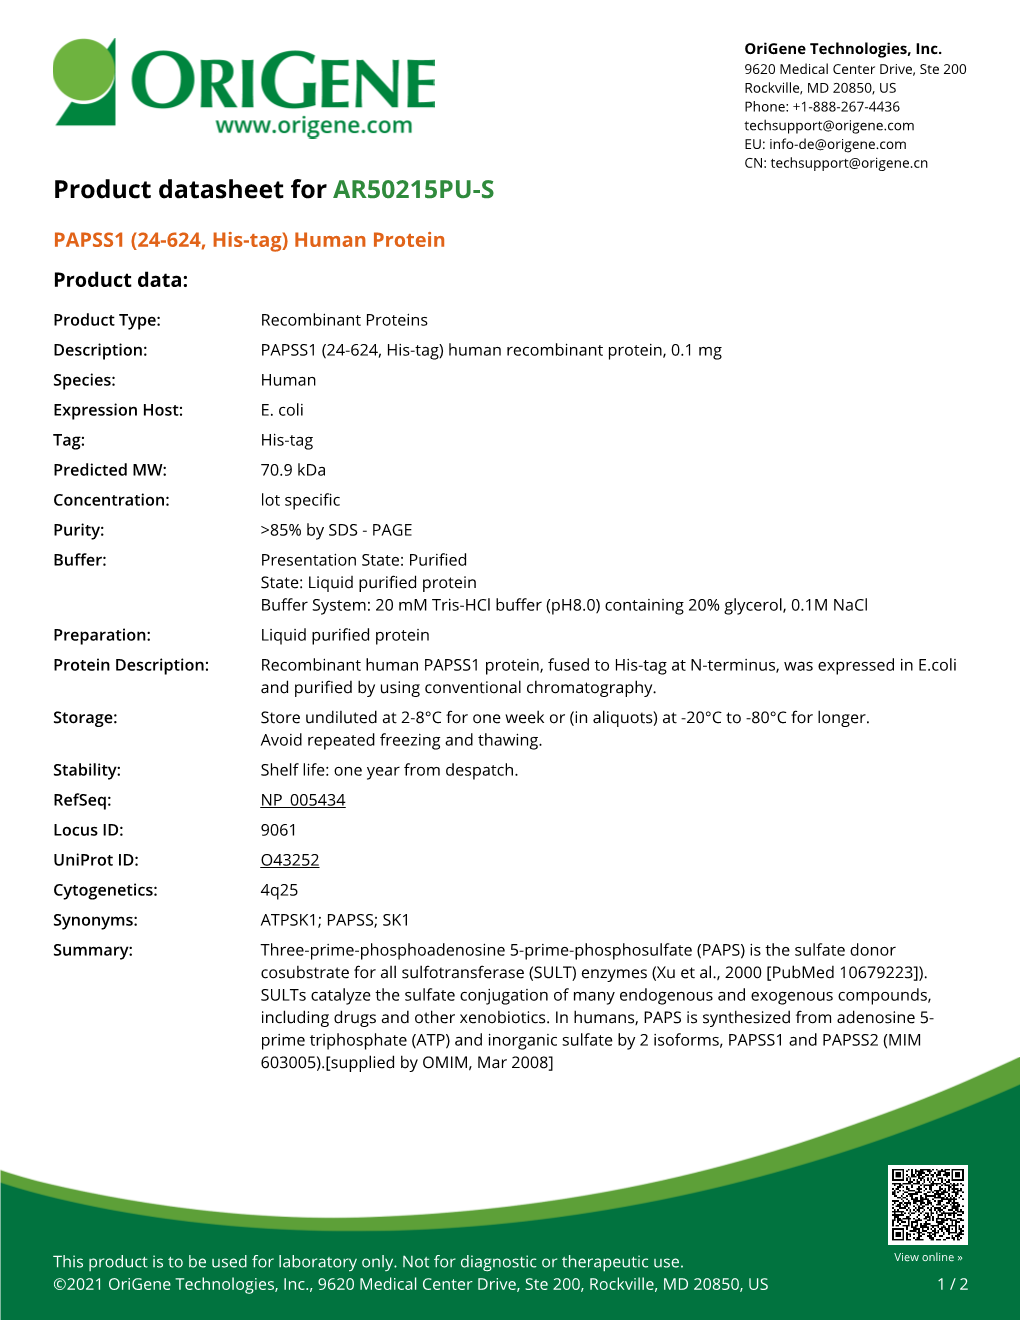 PAPSS1 (24-624, His-Tag) Human Protein – AR50215PU-S | Origene